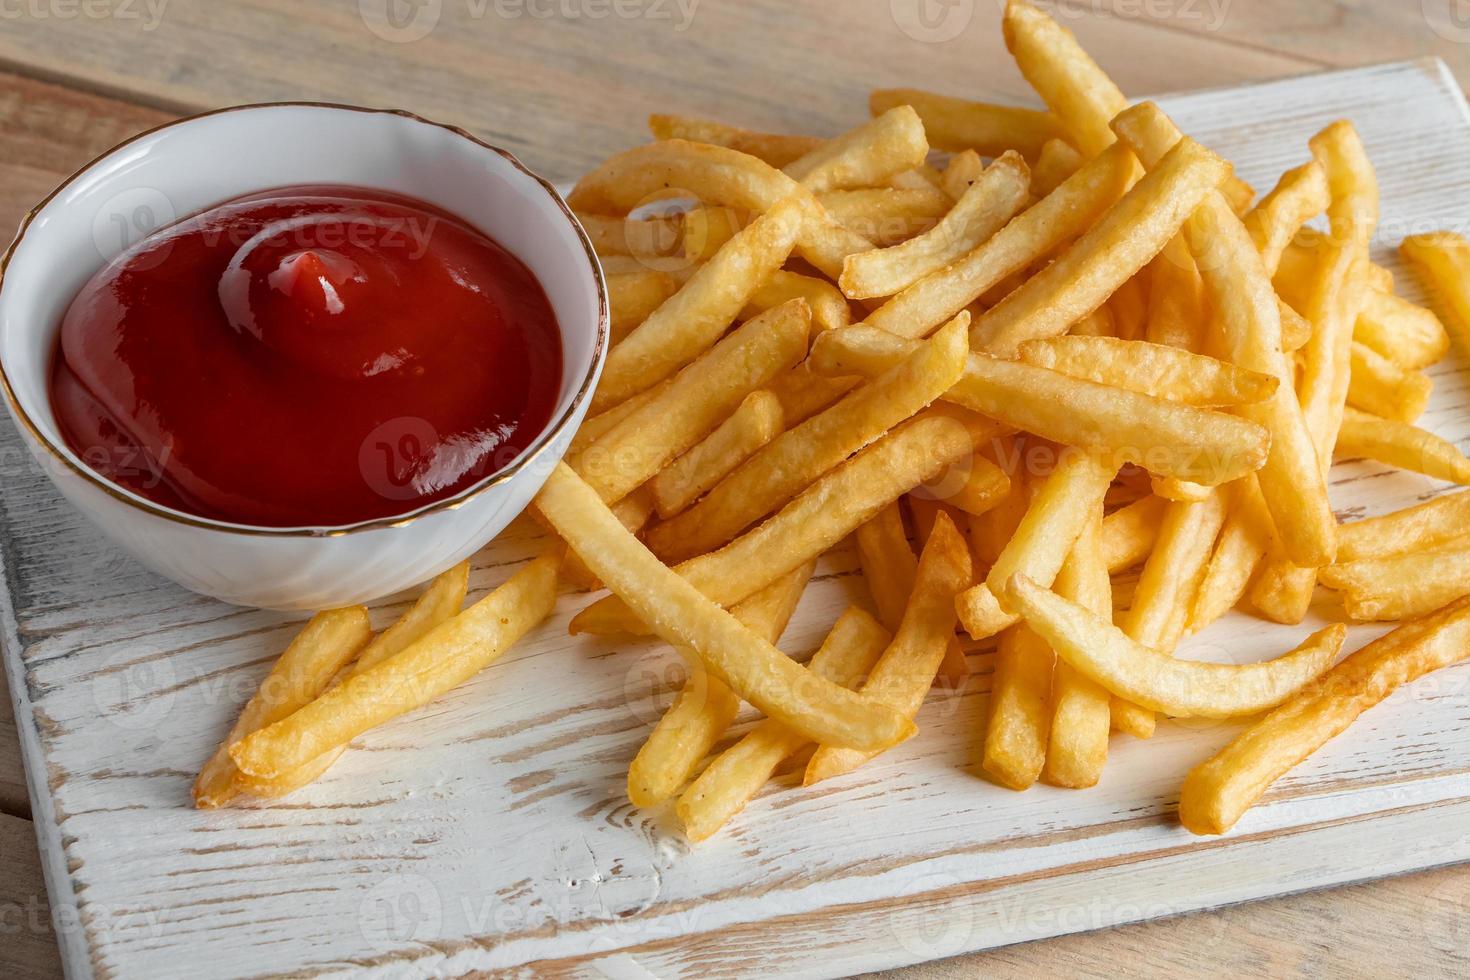 patatas fritas doradas calientes con ketchup sobre un fondo de madera. sabrosa comida rápida americana. foto